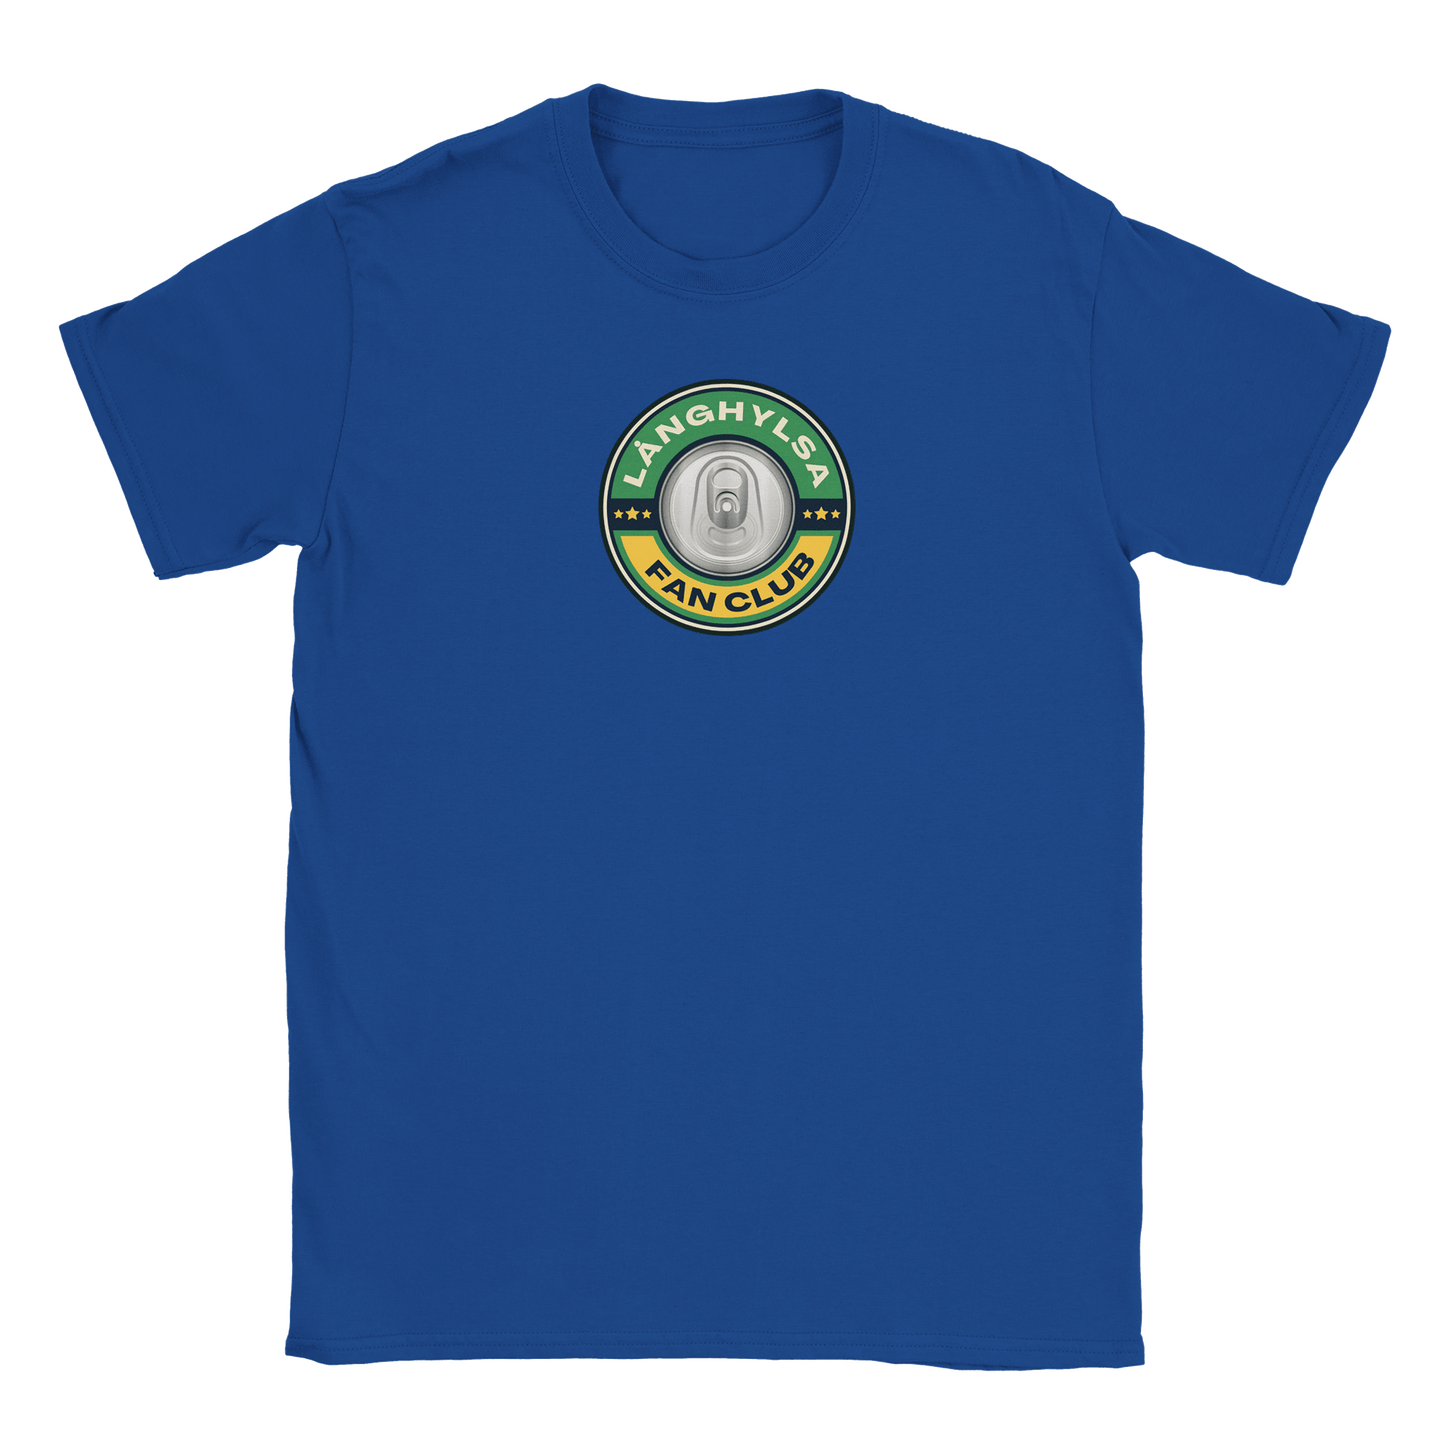 Långhylsa Fan Club - T-shirt Royal